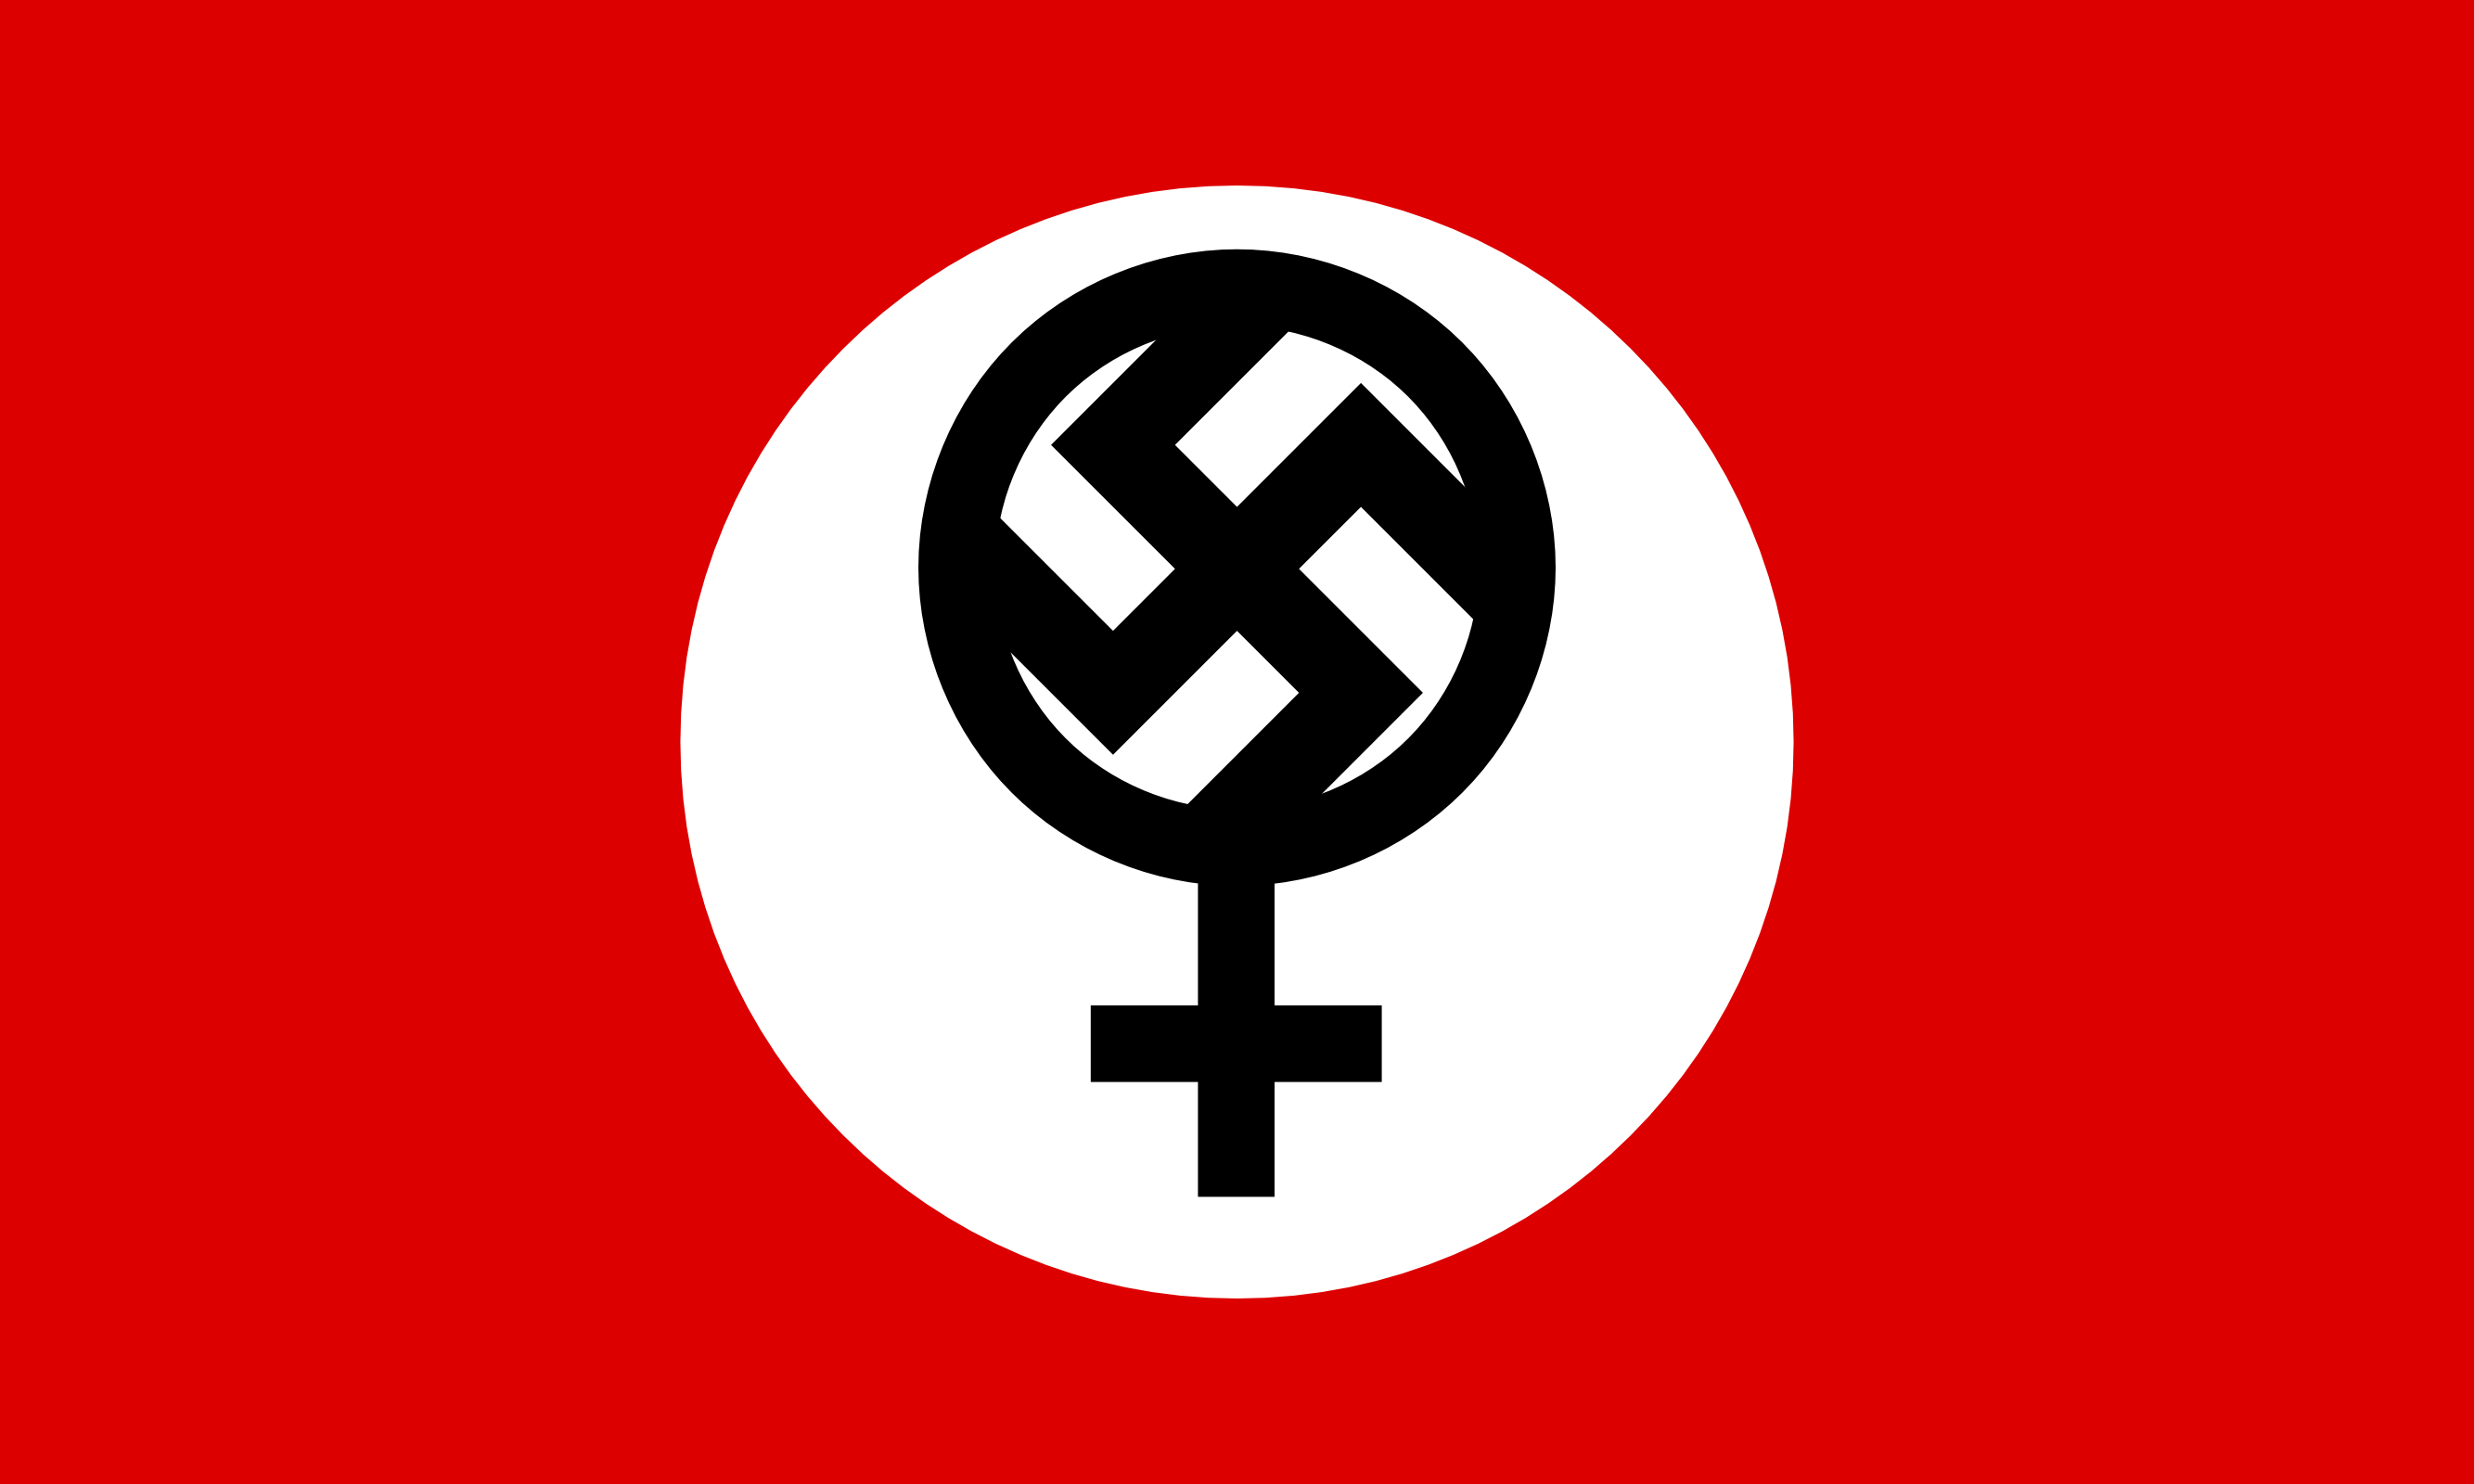 Archive org youtube. Фашистские символы. Нацистский знак. Наци феминизм.